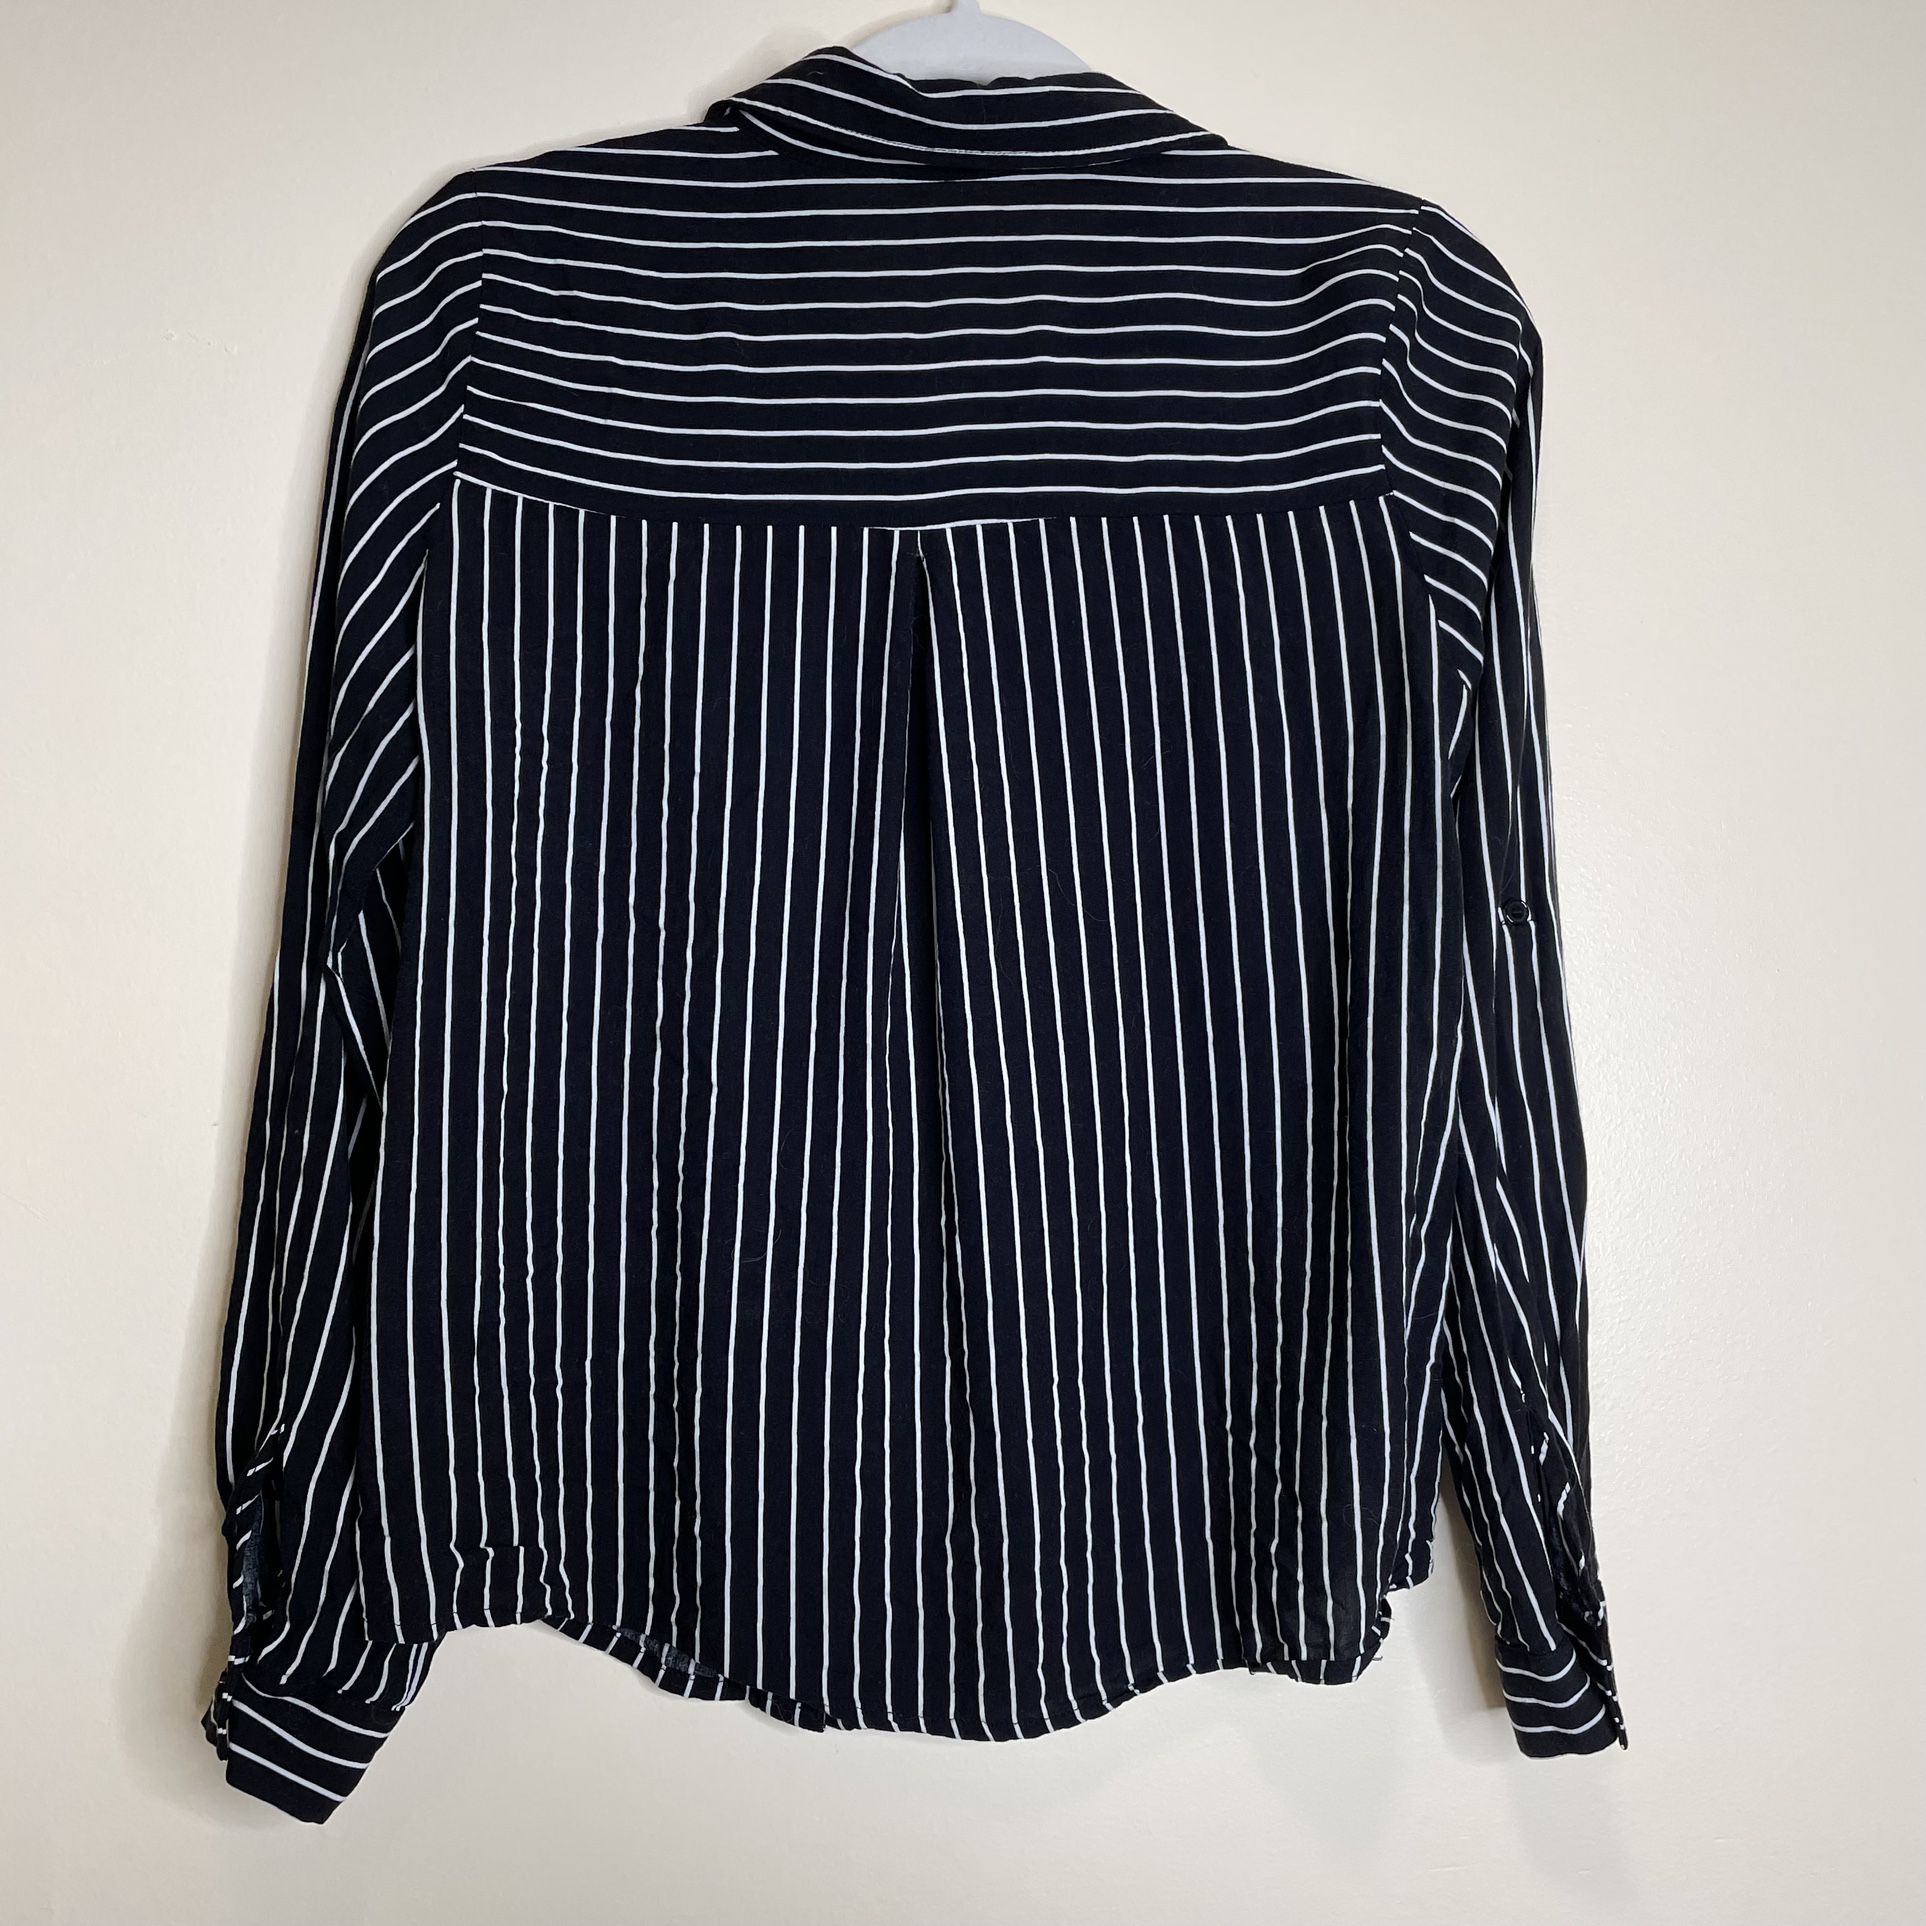 Black and White Striped Button Down Shirt Size Medium